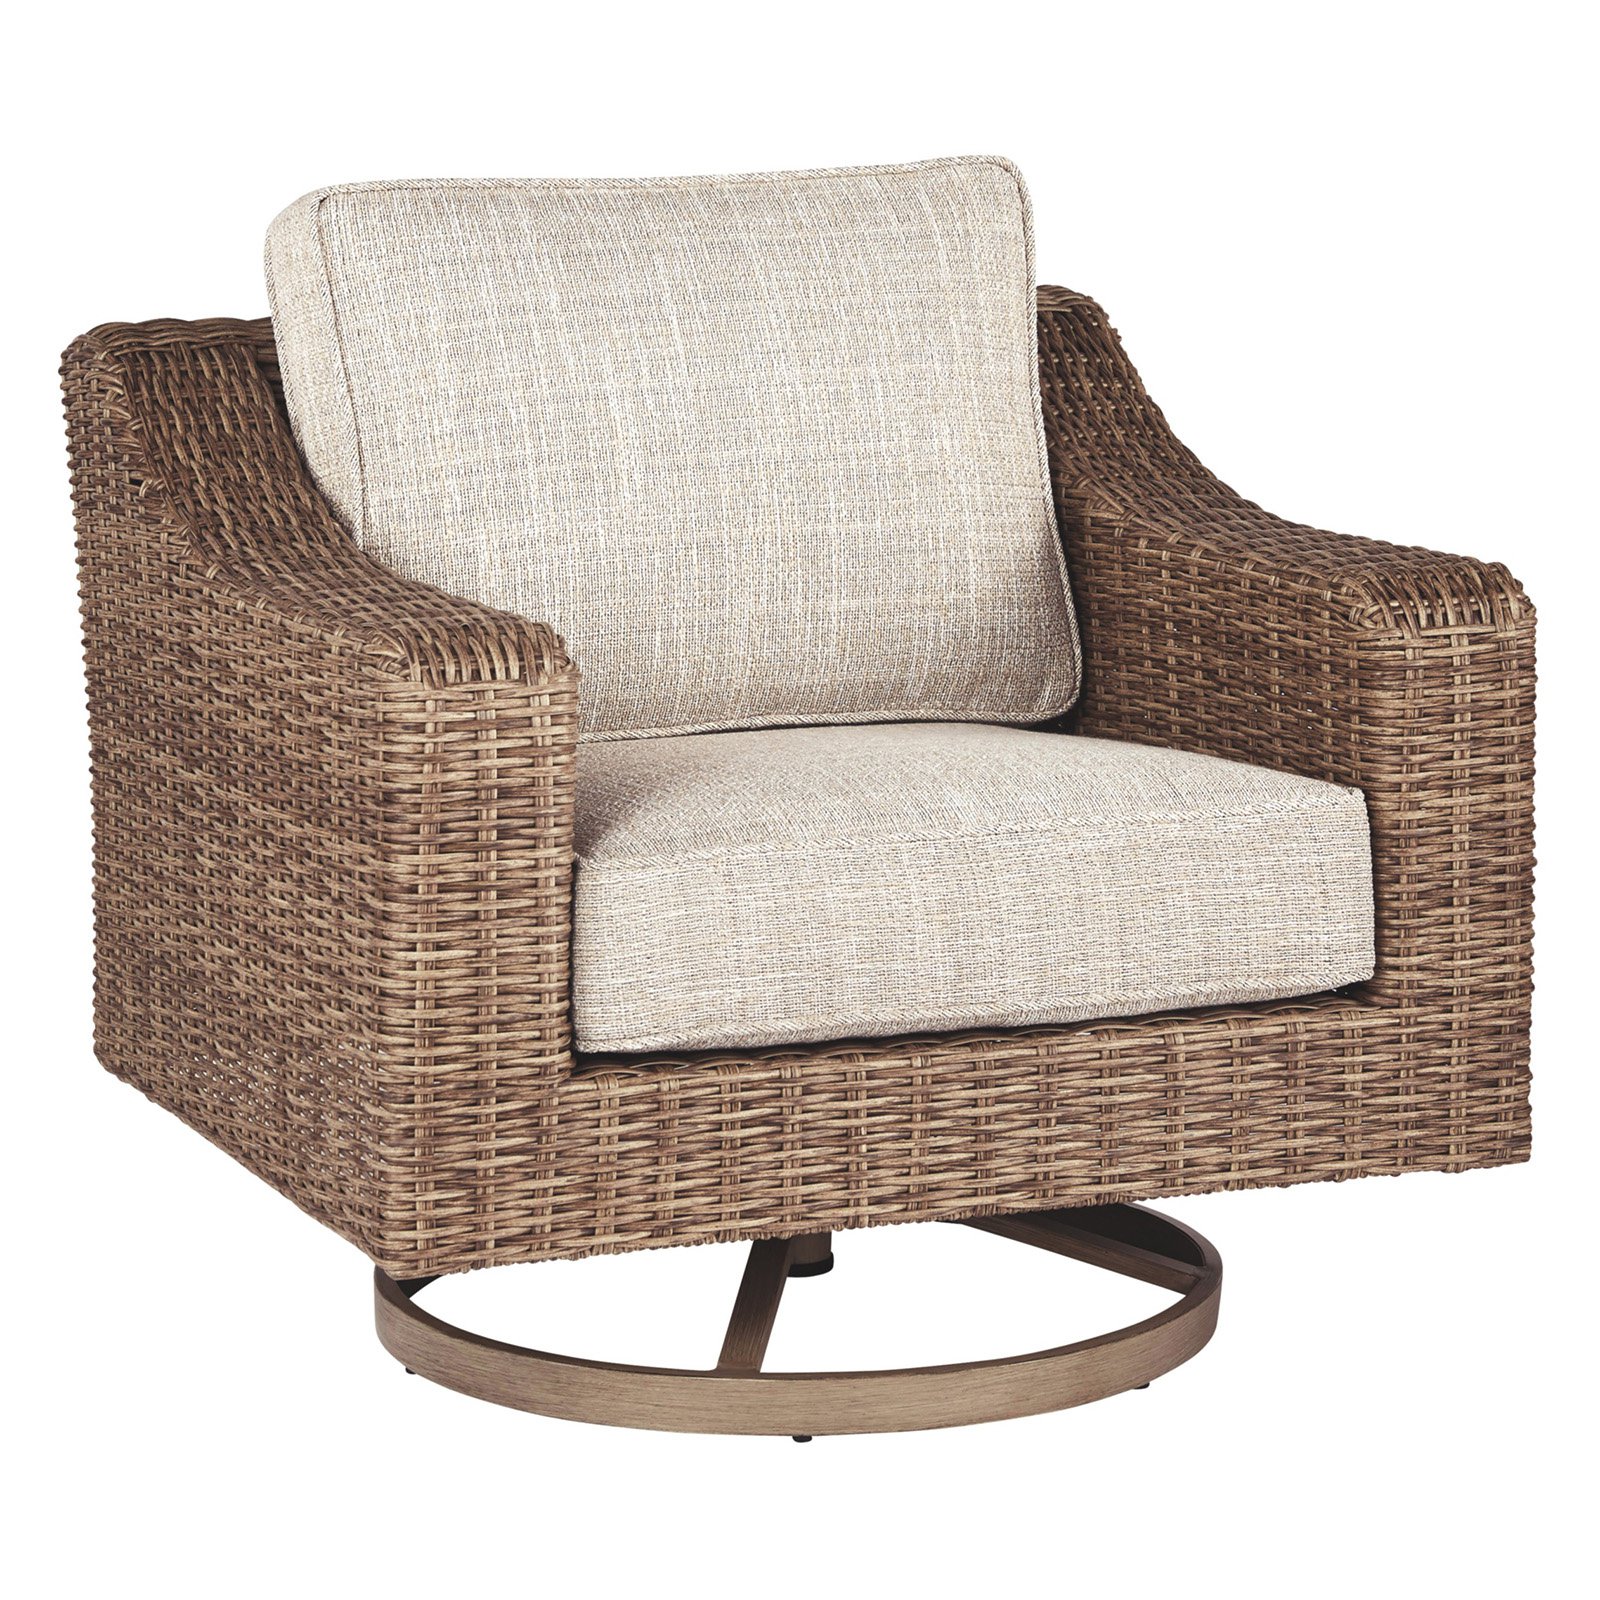 Ashley Furniture Beachcroft Swivel Patio Arm Chair in Beige - image 1 of 7